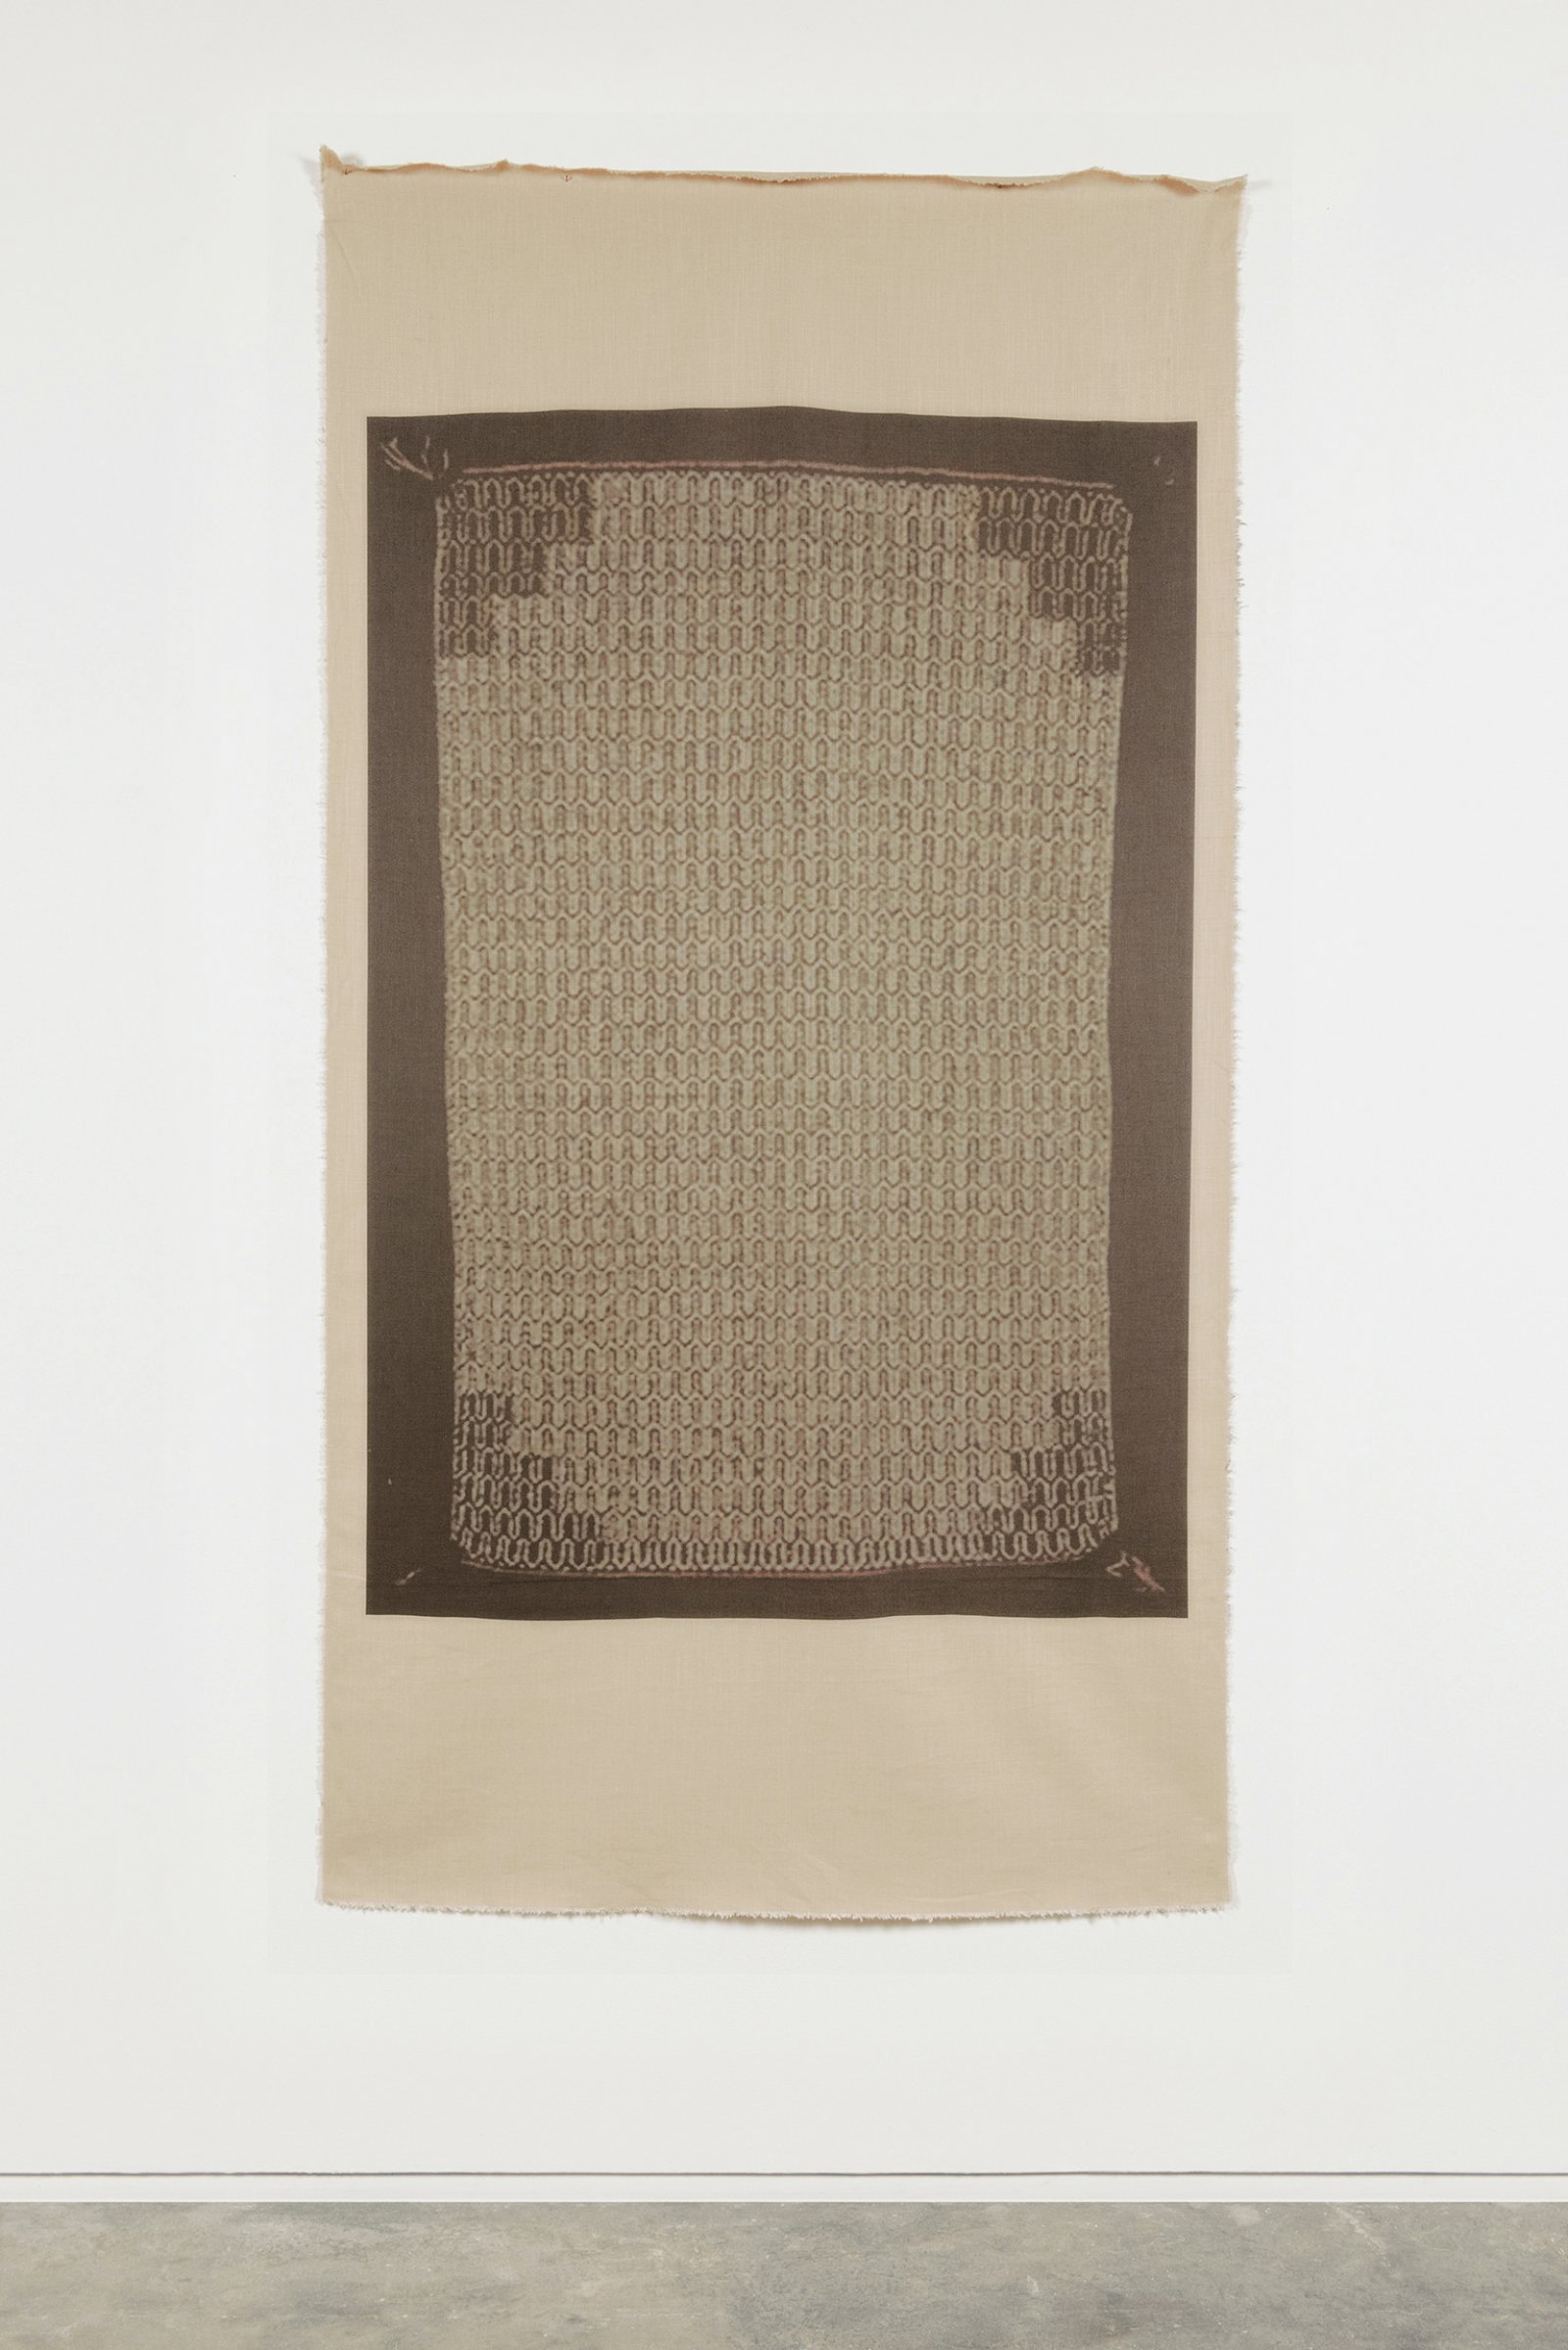 Duane Linklater, UMFA 1974.079.091.073, 2015, inkjet print on linen, nails, from Navajo Saddle Blanket, Utah Museum of Fine Arts Collection, 85 x 44 in. (216 x 112 cm)